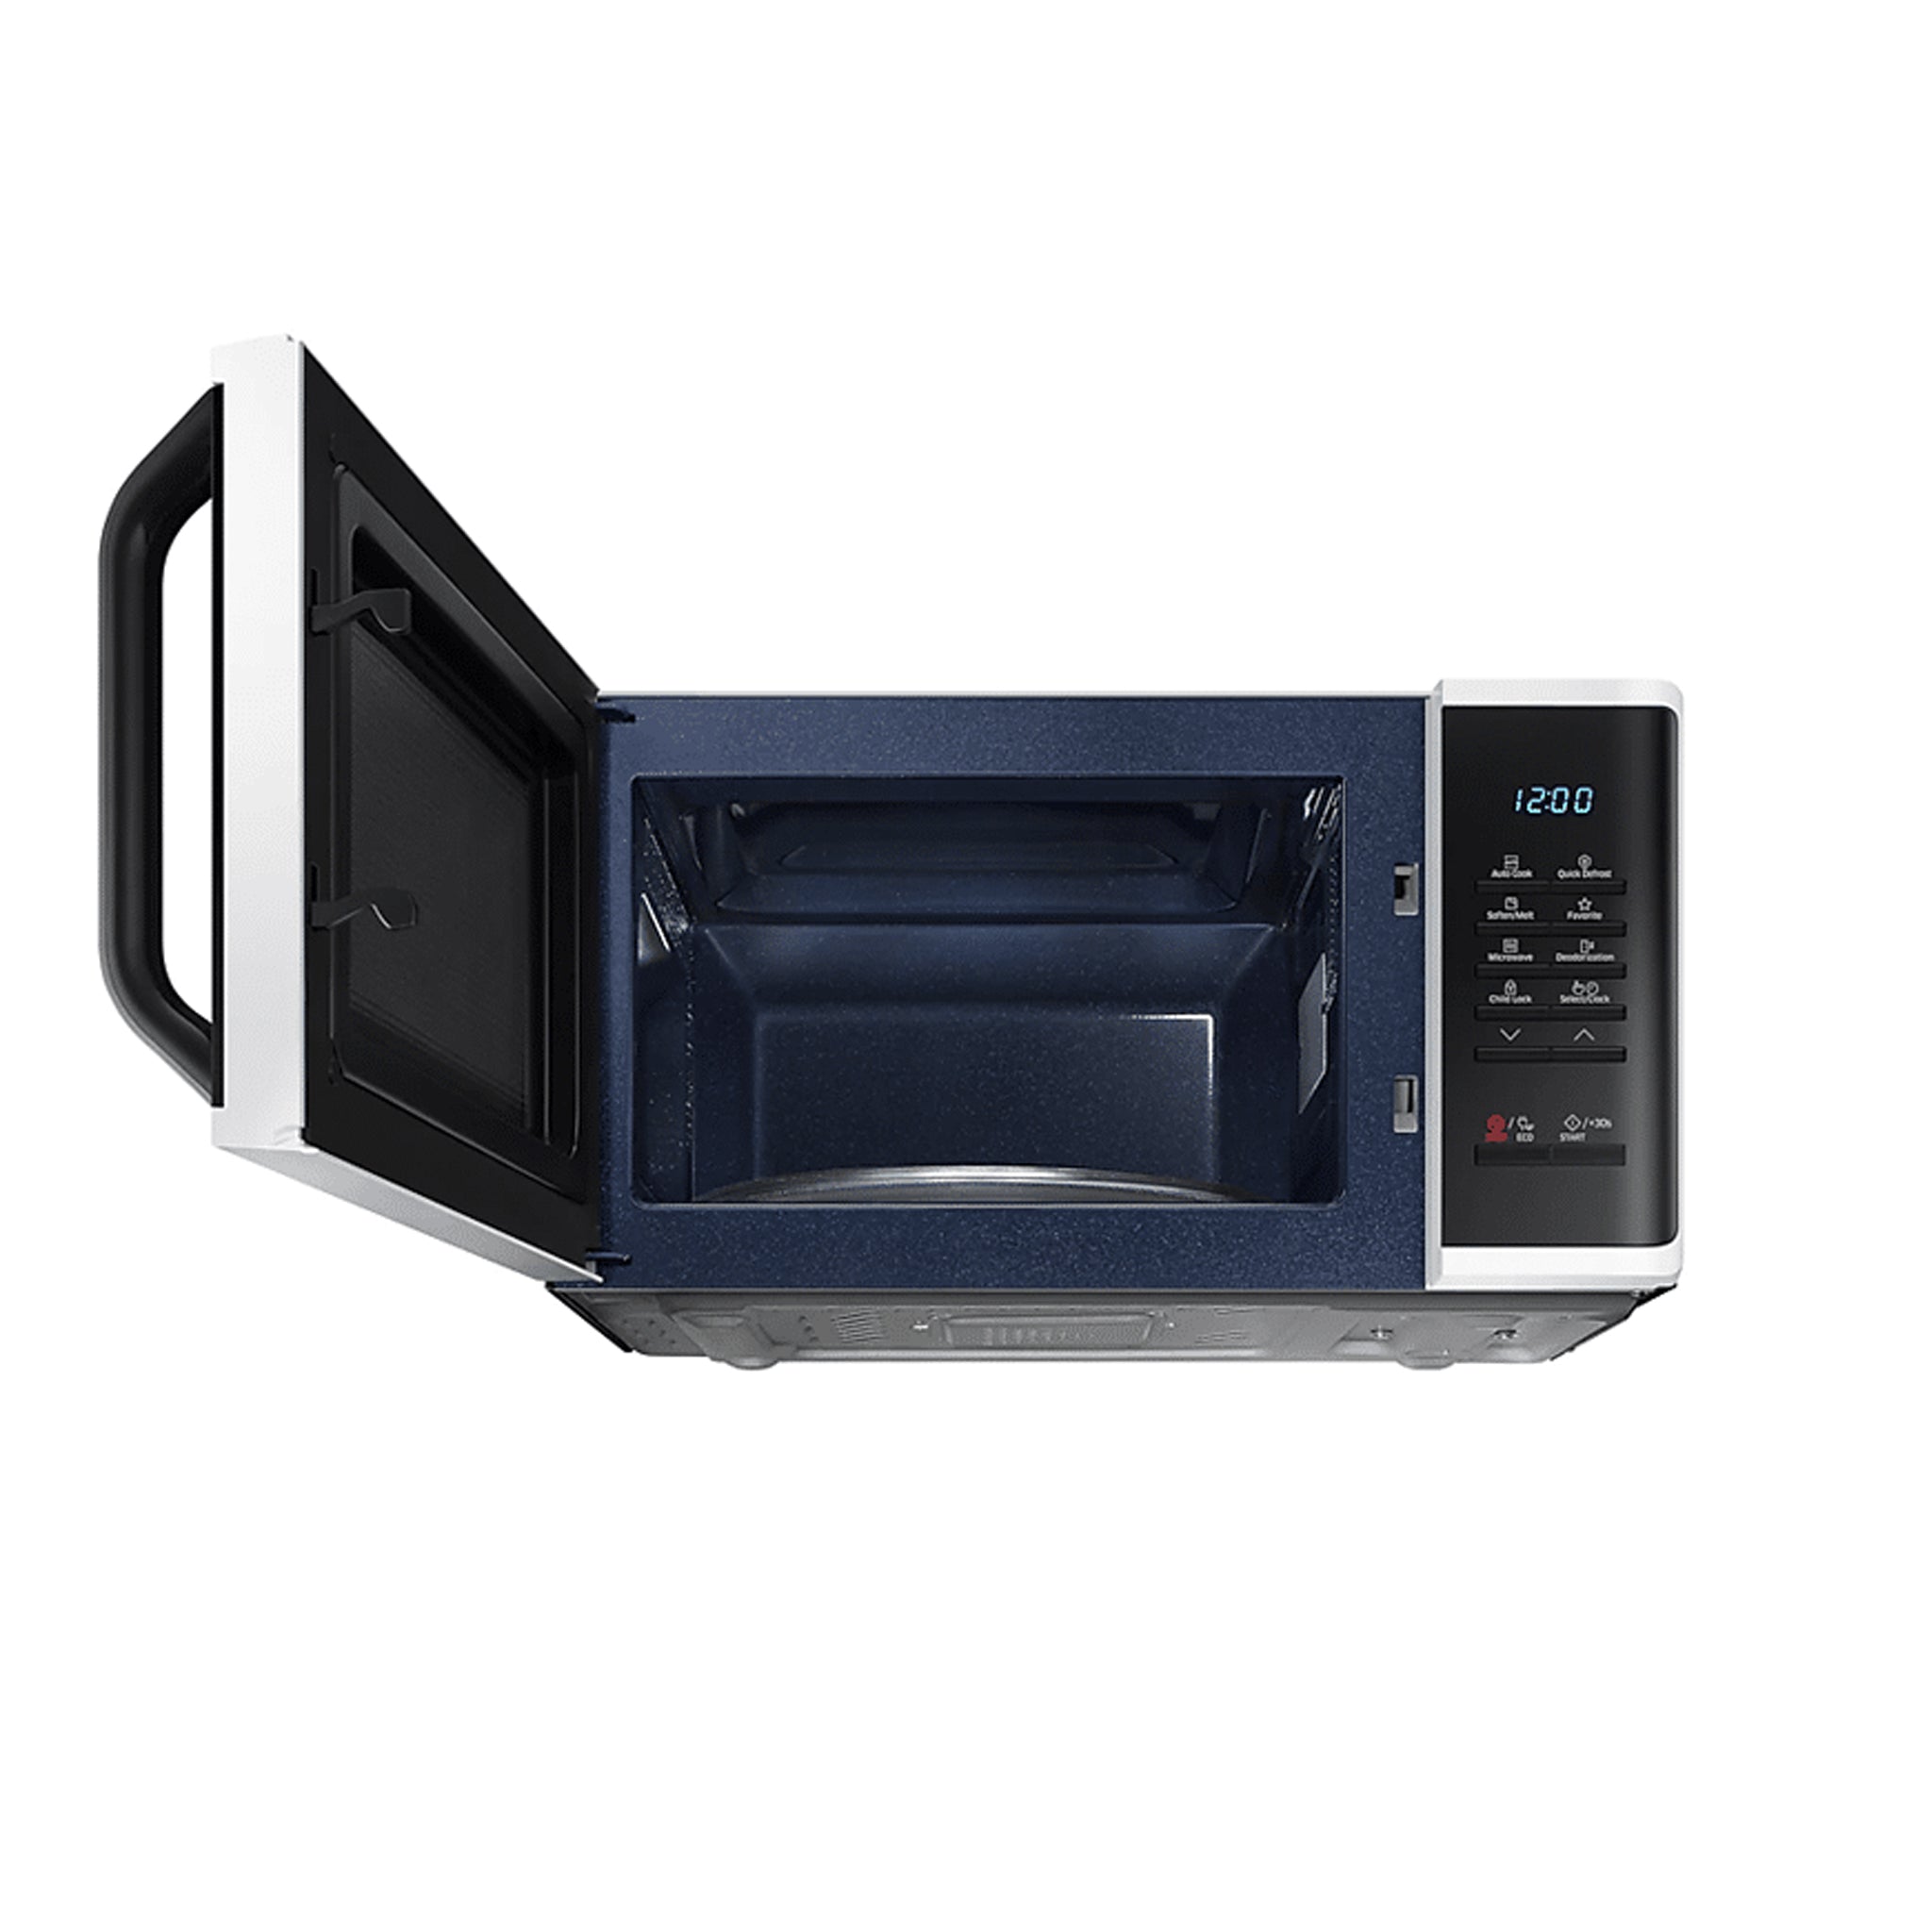 Samsung 23L MS23K3513AW Microwave Oven Samsung